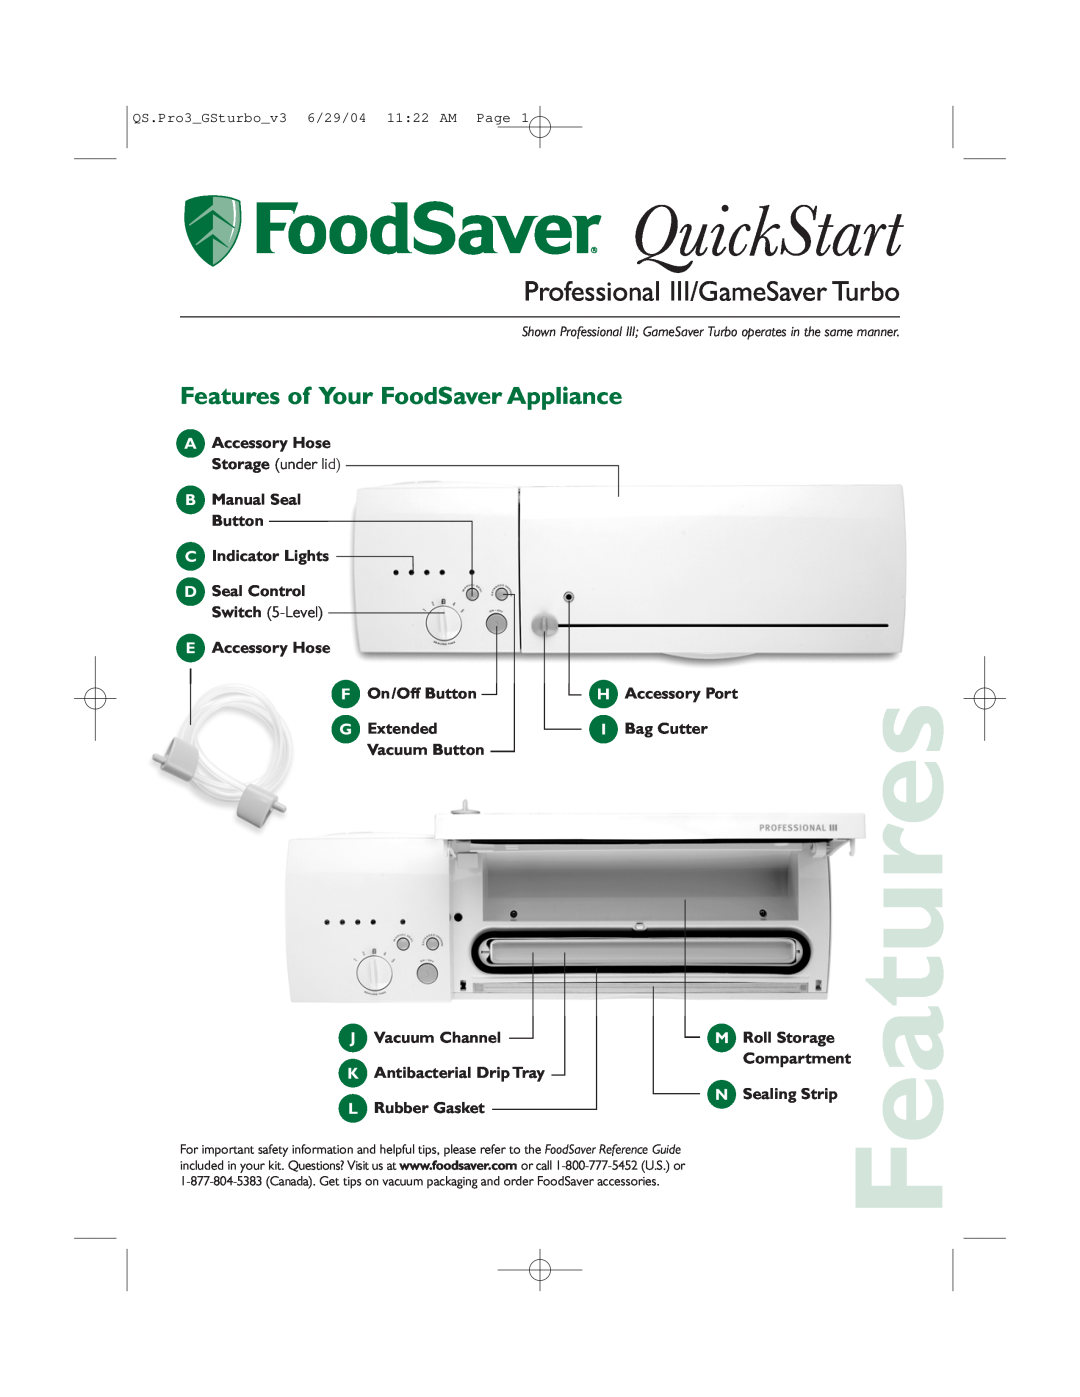 FoodSaver GameSaver Turbo, Professional III quick start Features of Your FoodSaver Appliance, QuickStart 